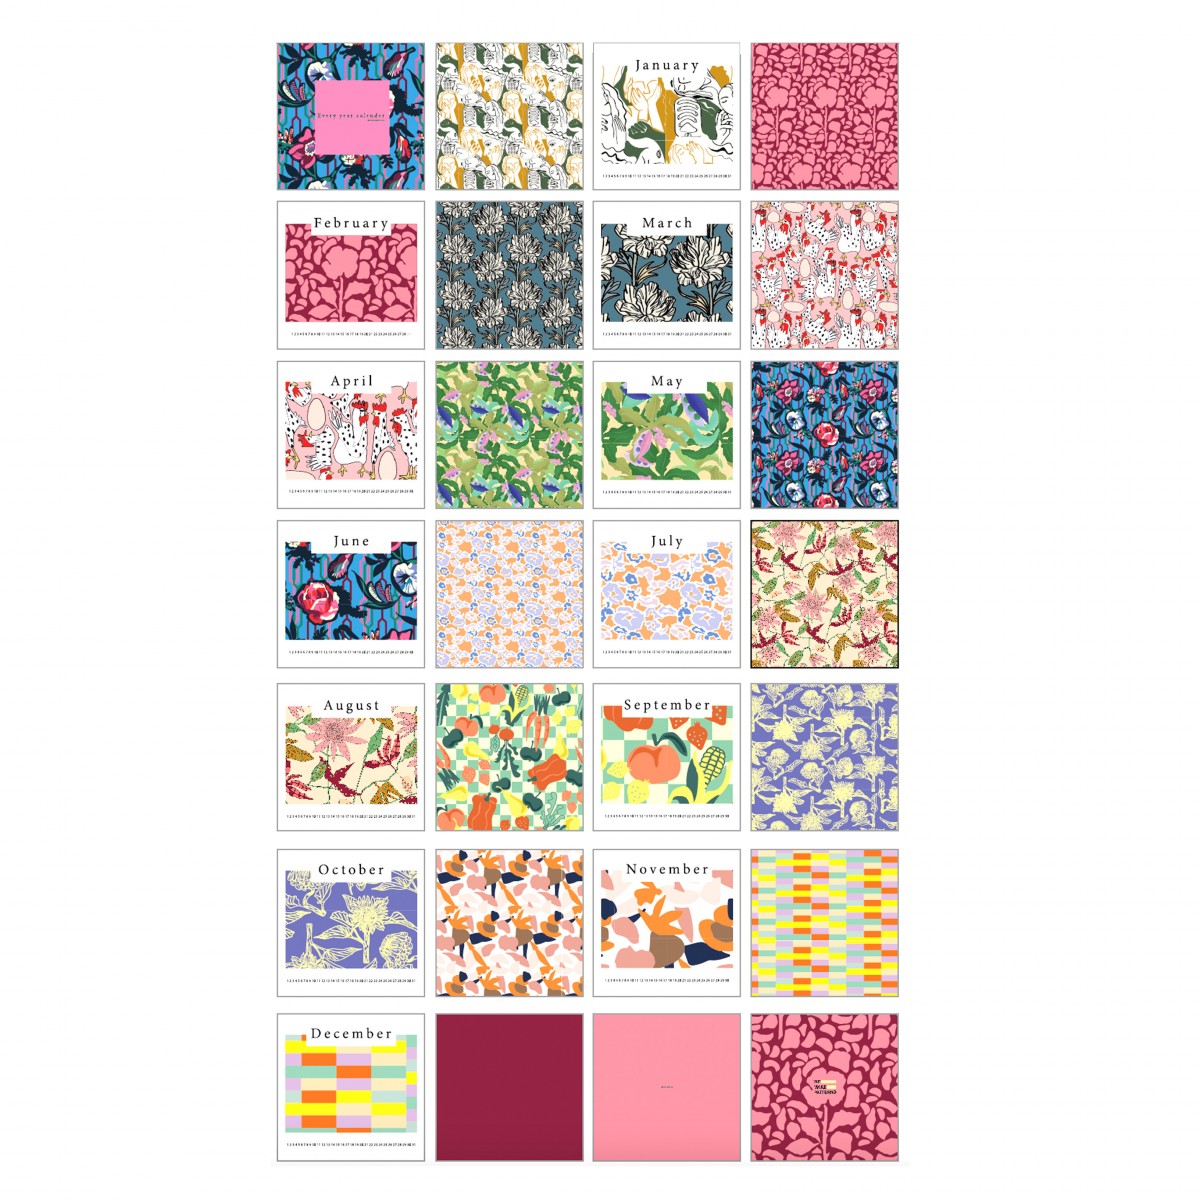 We Make Patterns Design - Every Year Calendar